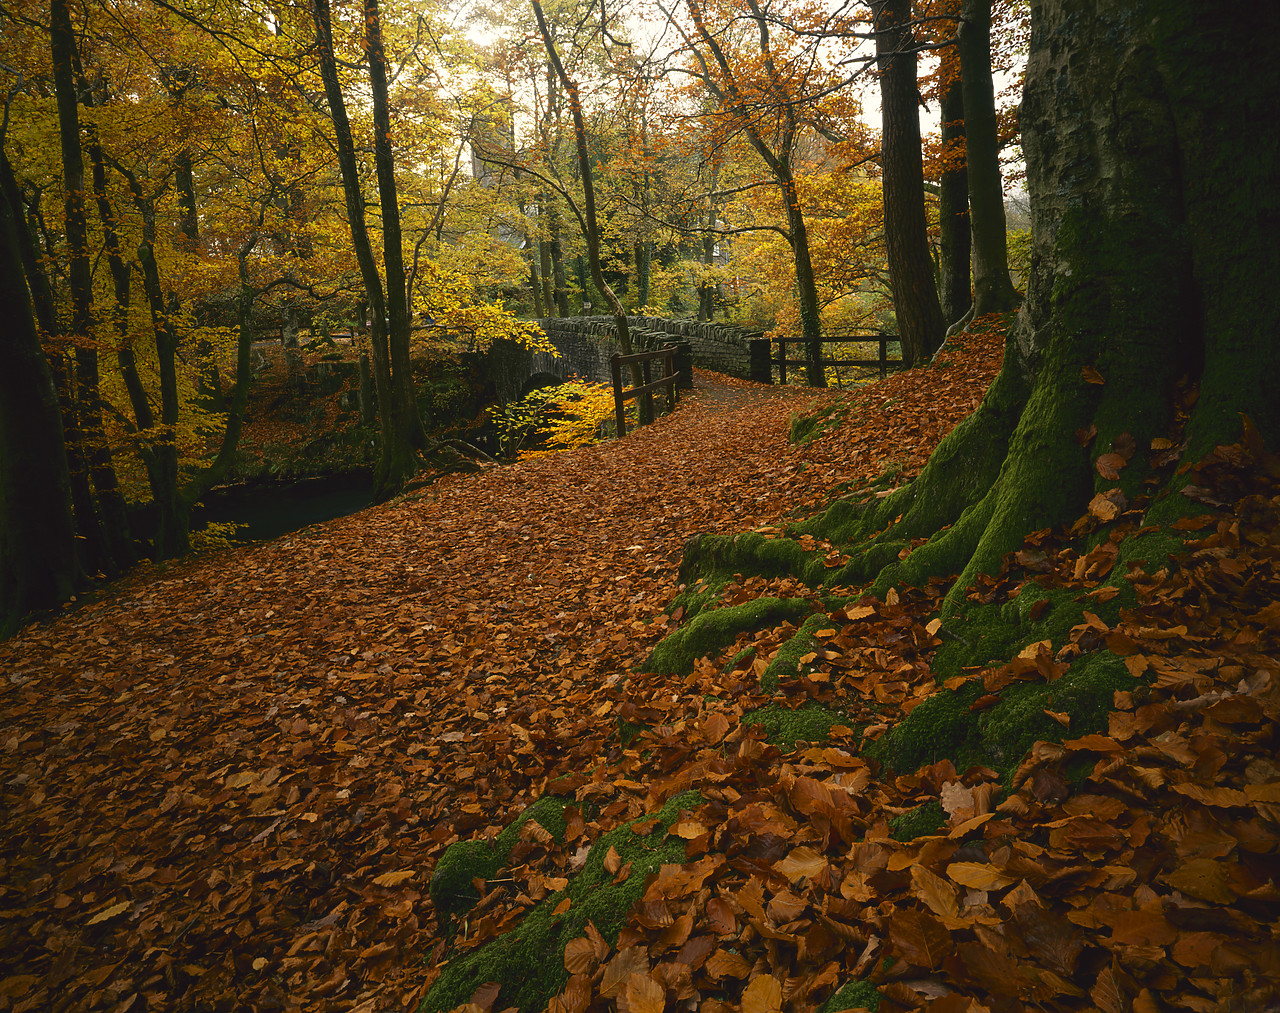 #924140-1 - Carpet of Fallen Beech Leaves, Clappersgate, Cumbria, England